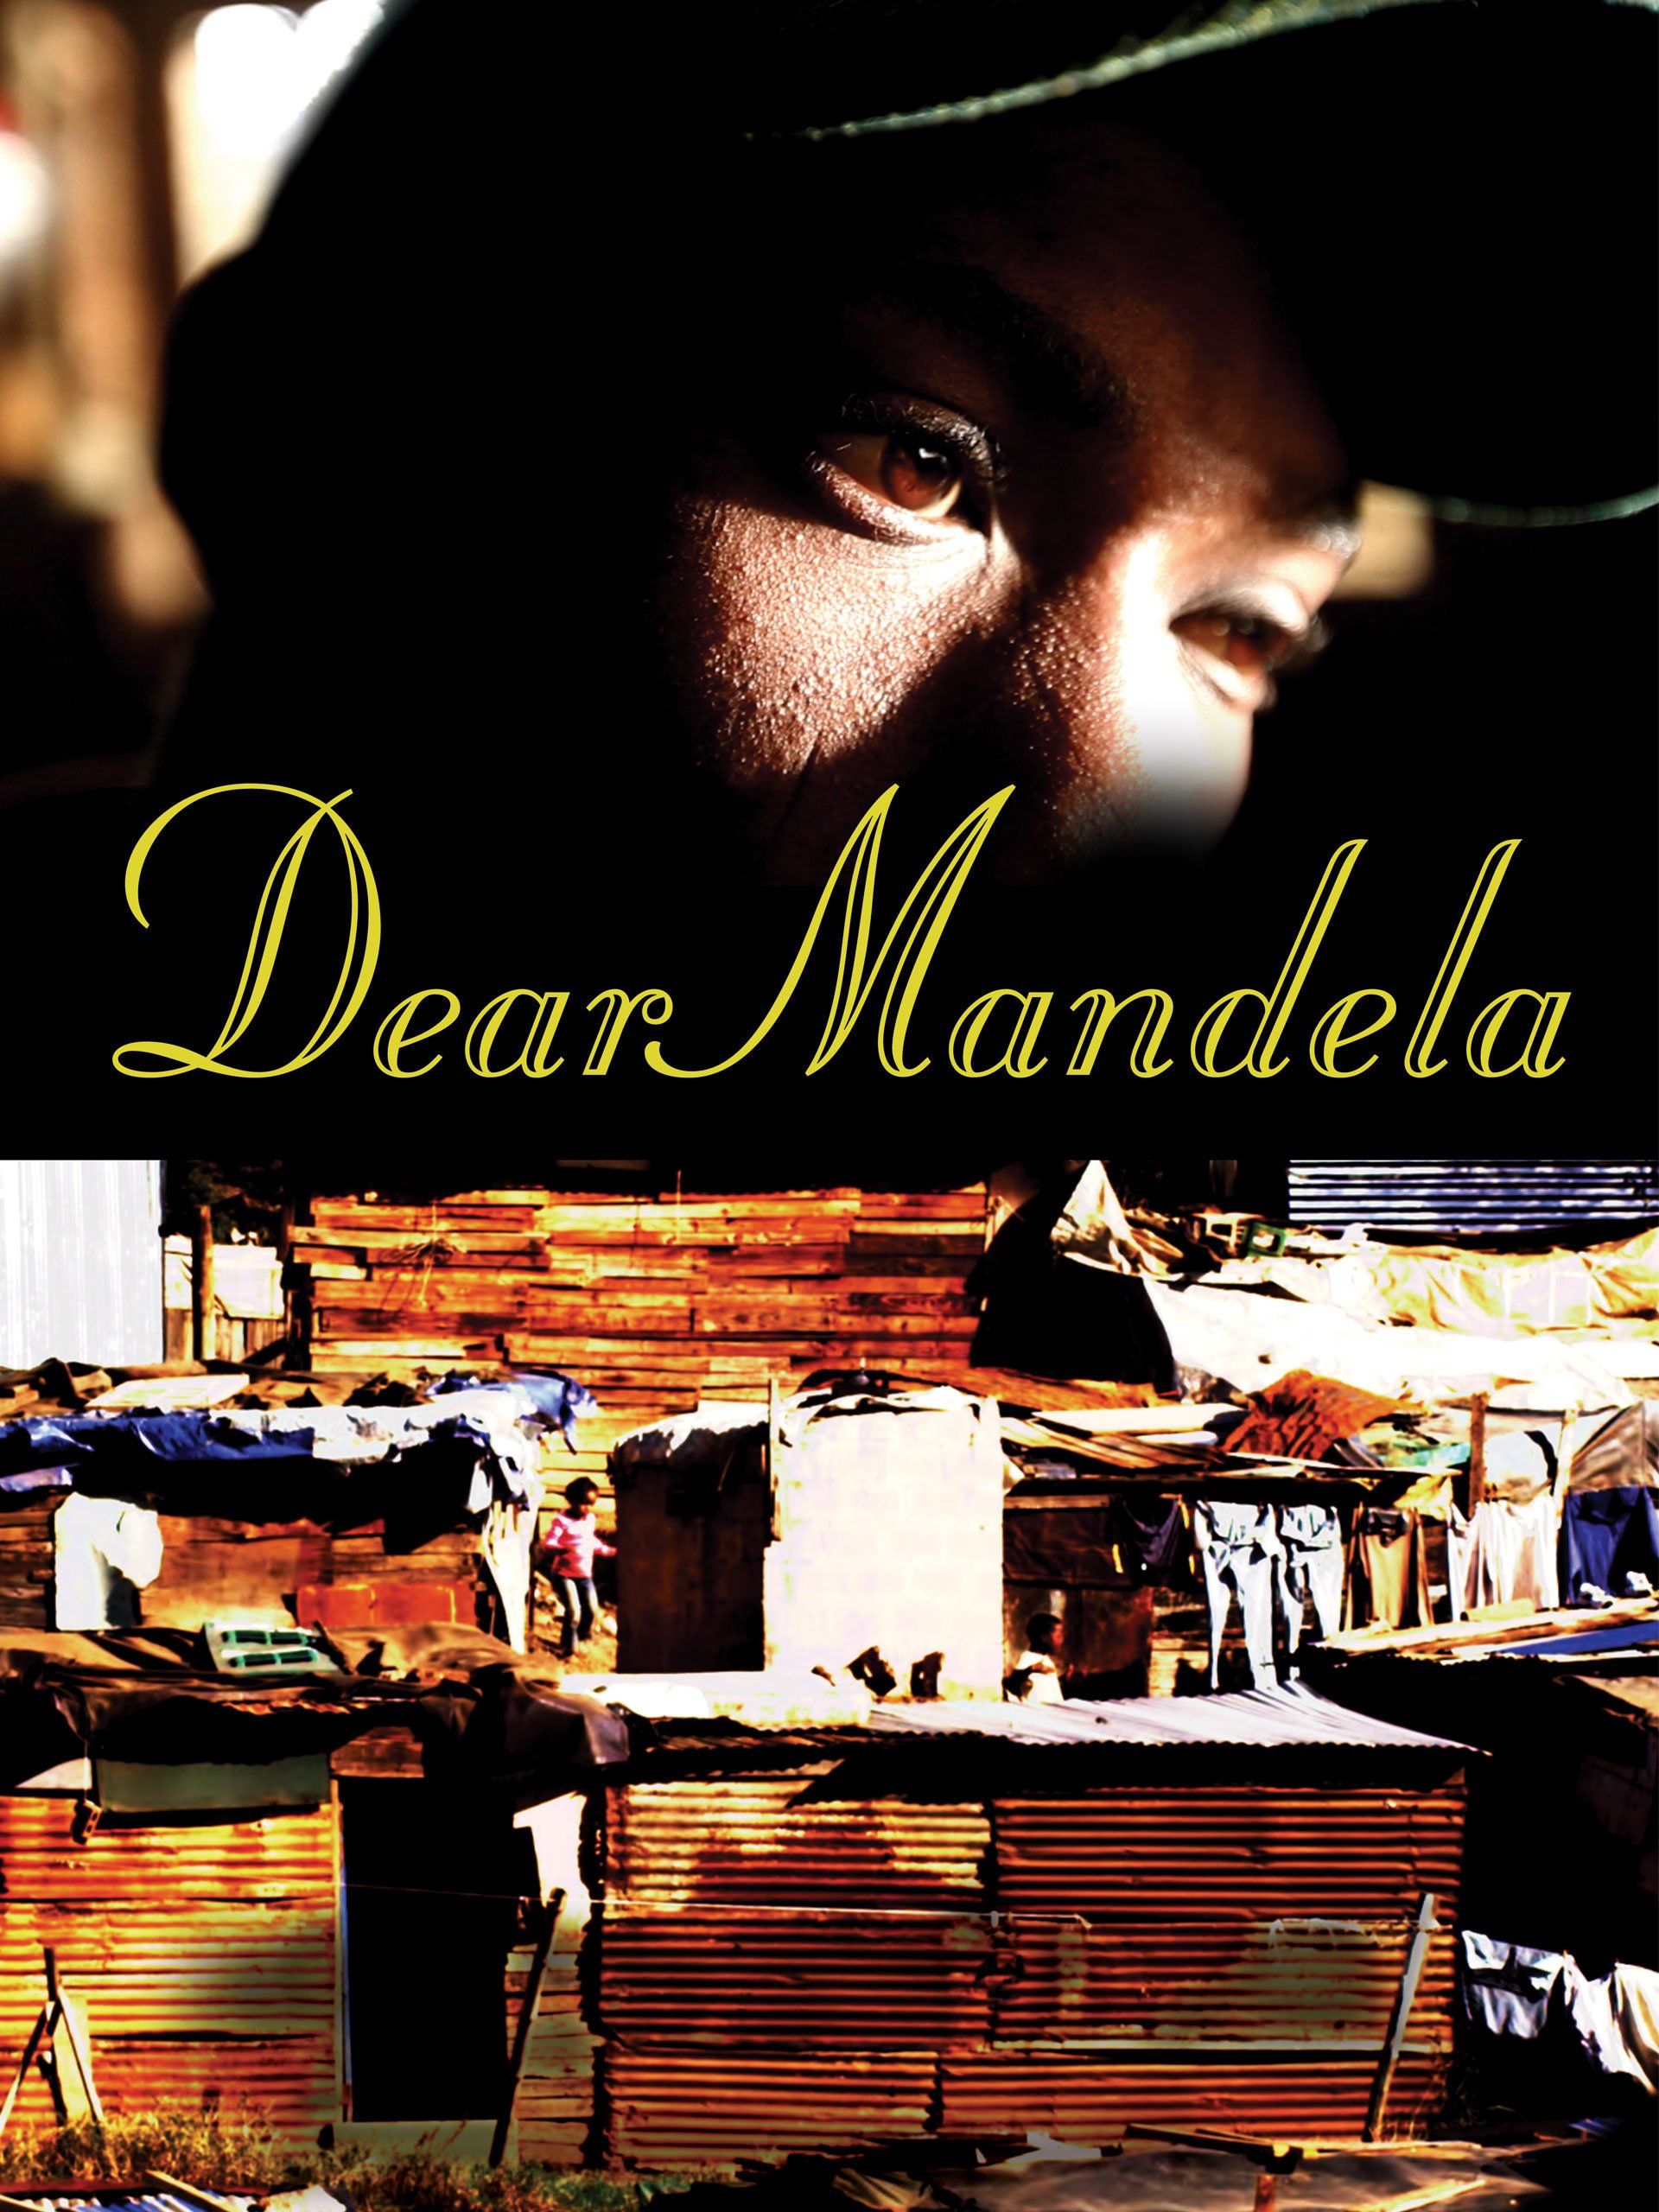 Dear Mandela